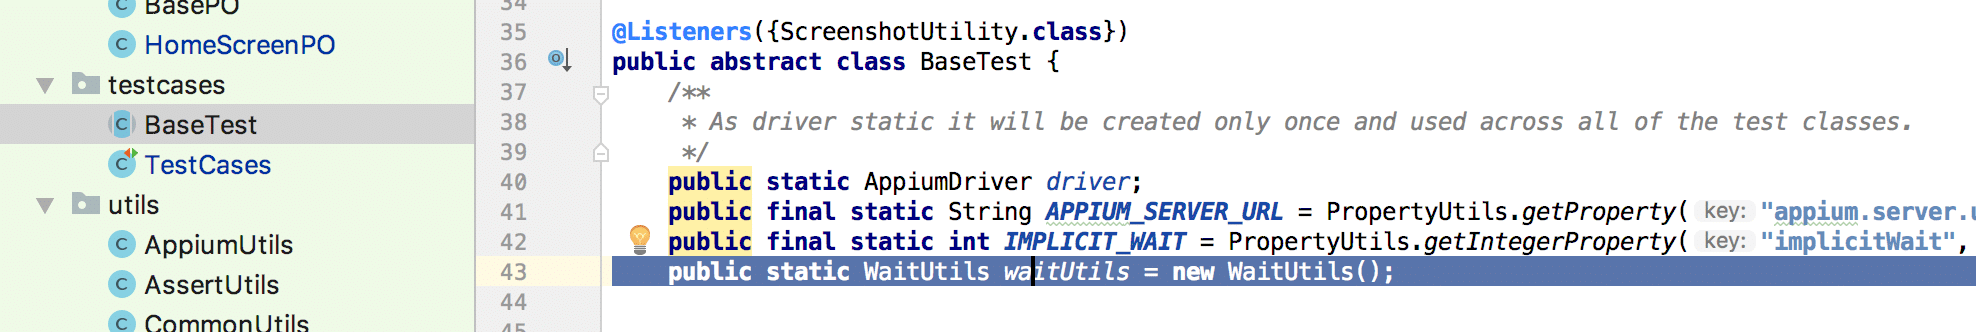 Image of Java code